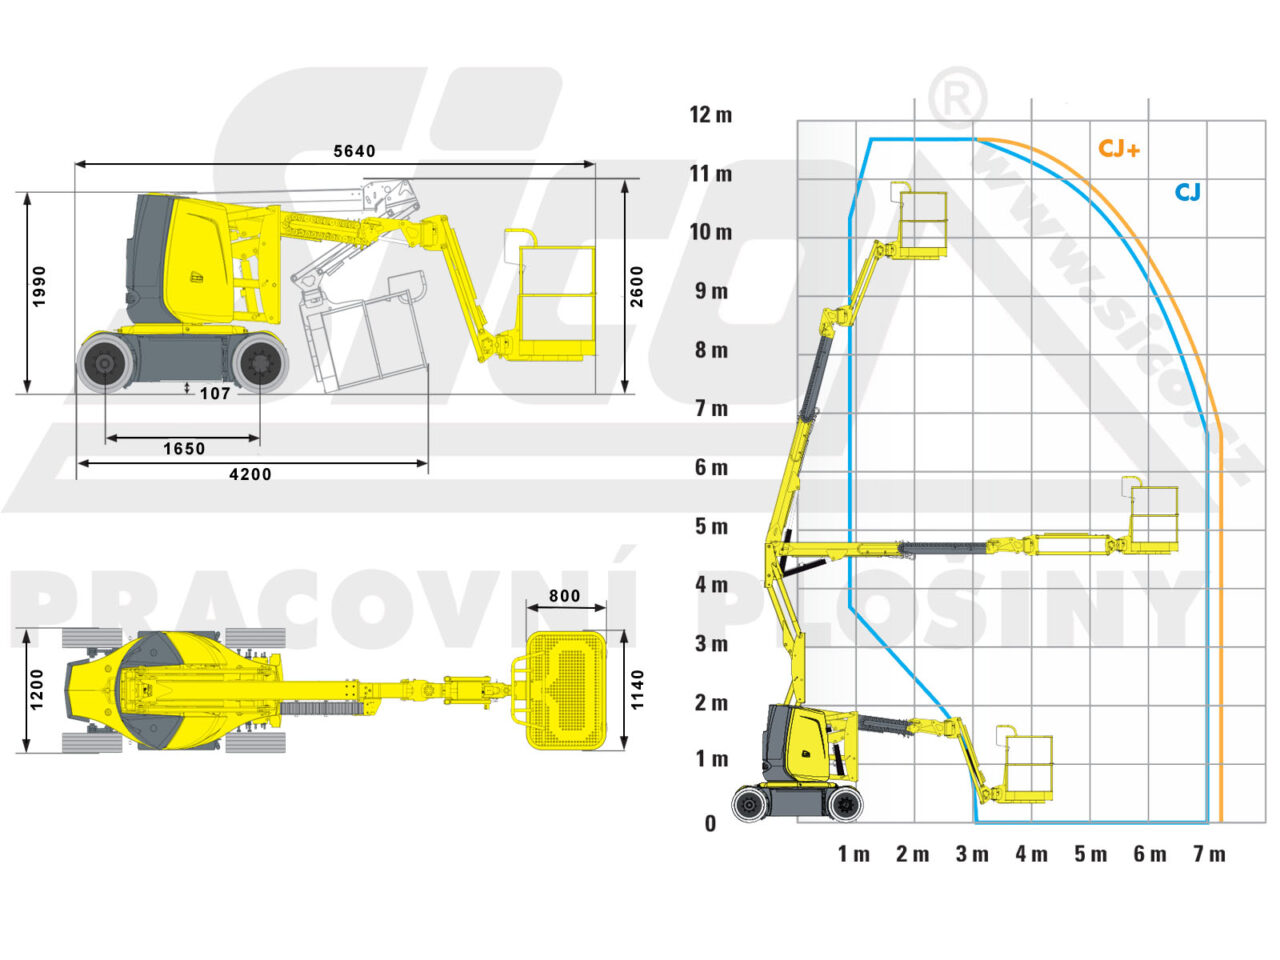 Haulotte HA 12 CJ+ pracovní diagram a rozměry